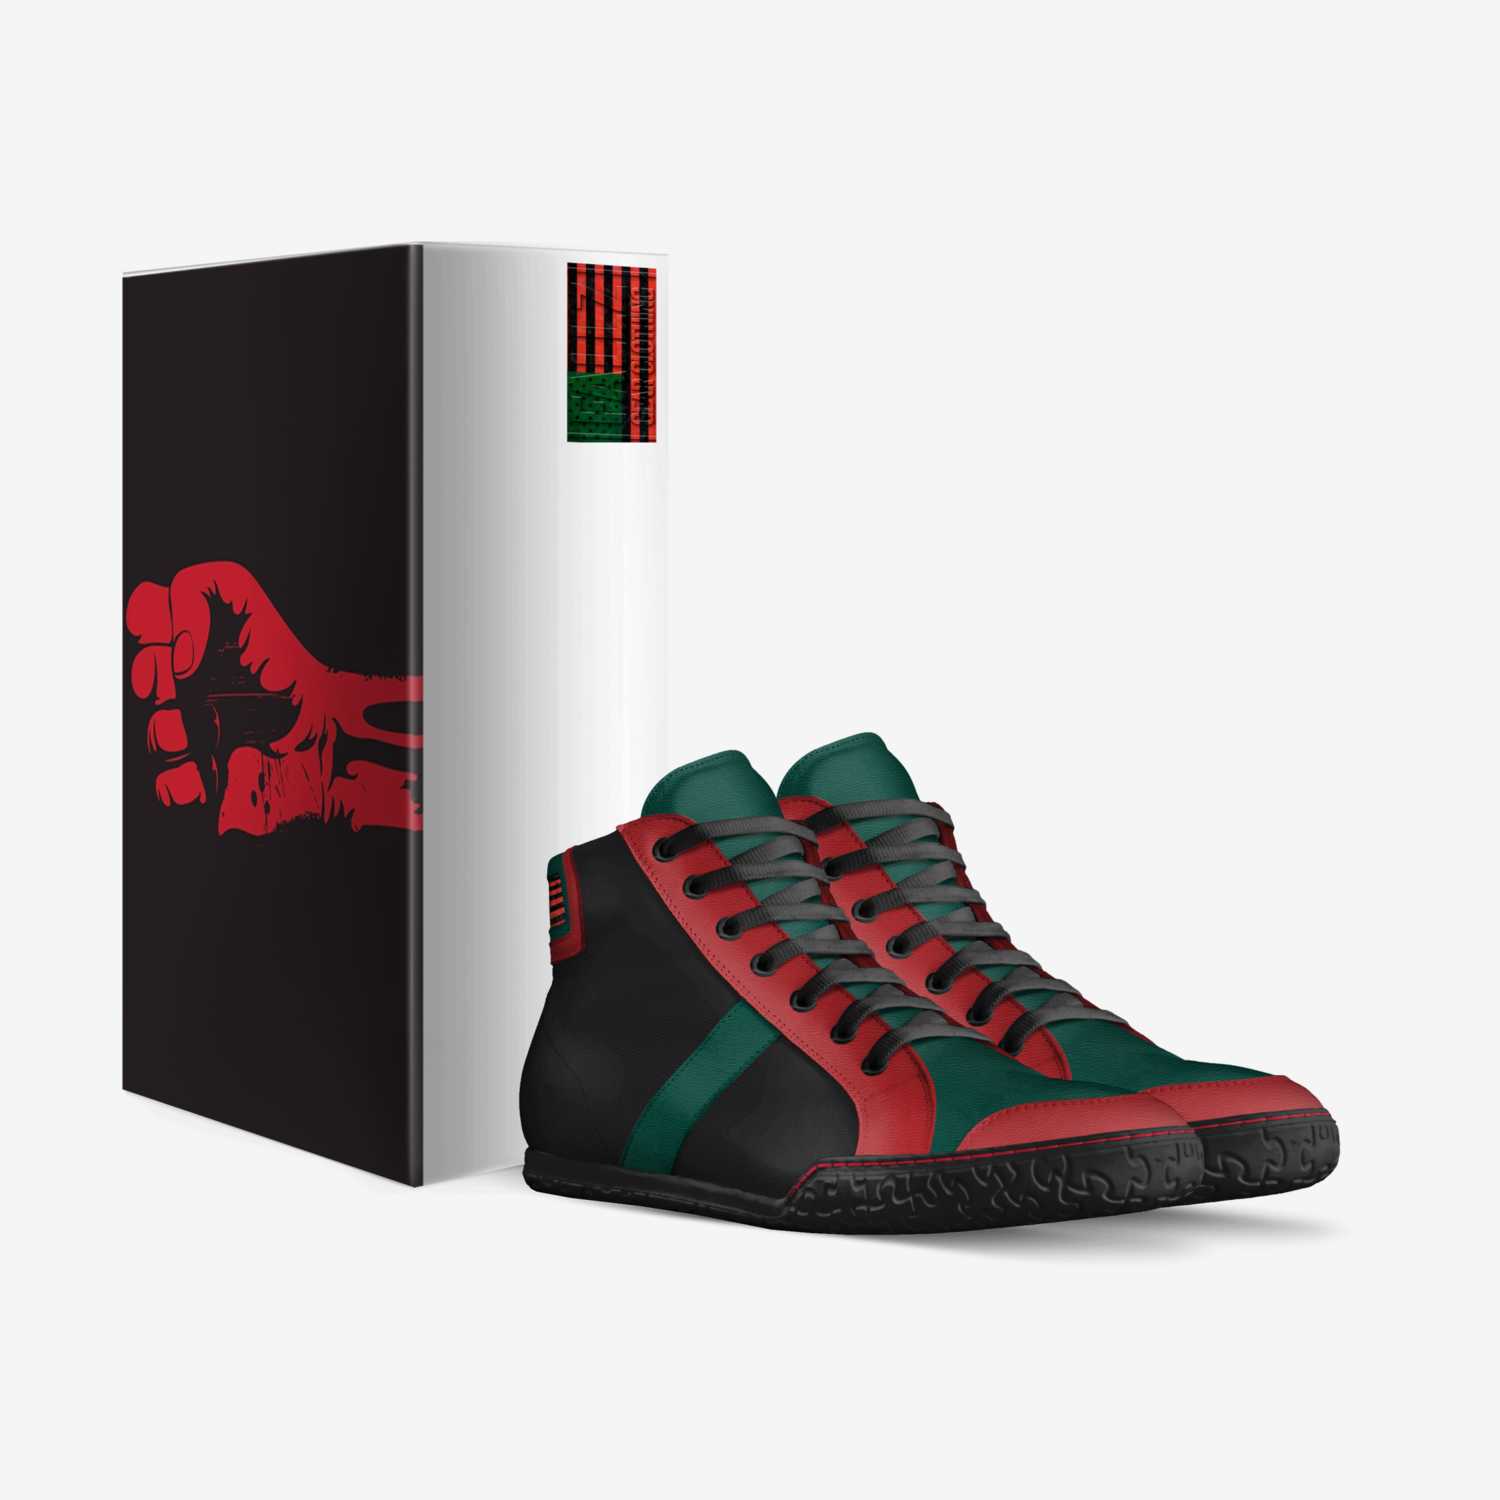 Fallz Gear: HuhMan custom made in Italy shoes by Fallz Gear | Box view